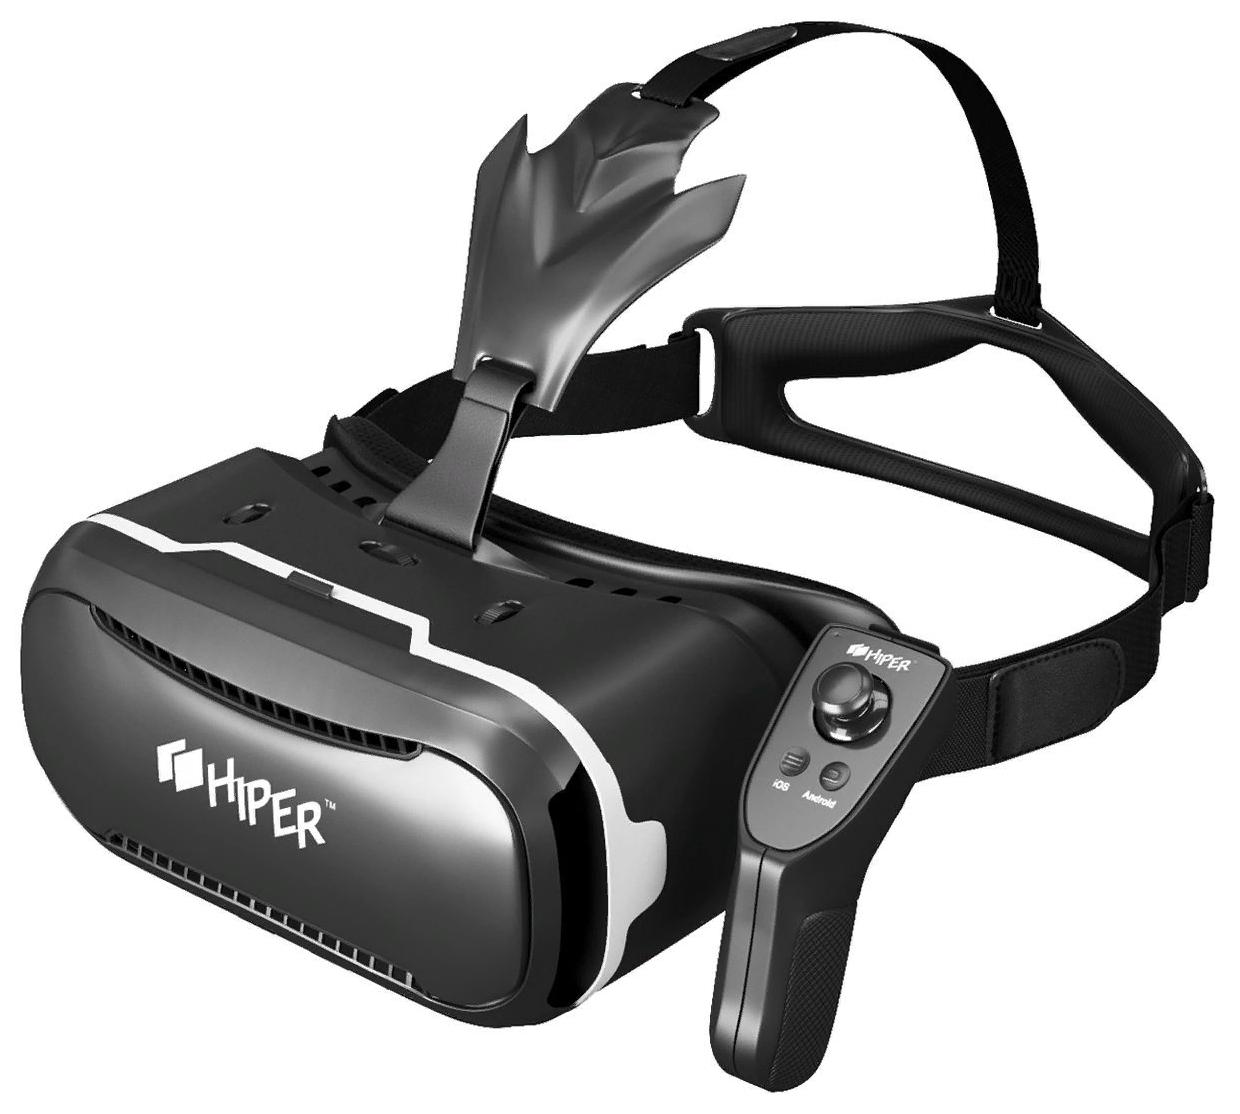 Джойстик виар для телефона. Очки виртуальной реальности Hiper VR. Очки виртуальной реальности Hiper VR Max. Очки виртуальной реальности Hyper VRQ. Виртуальные очки для смартфона Hiper VRQ.